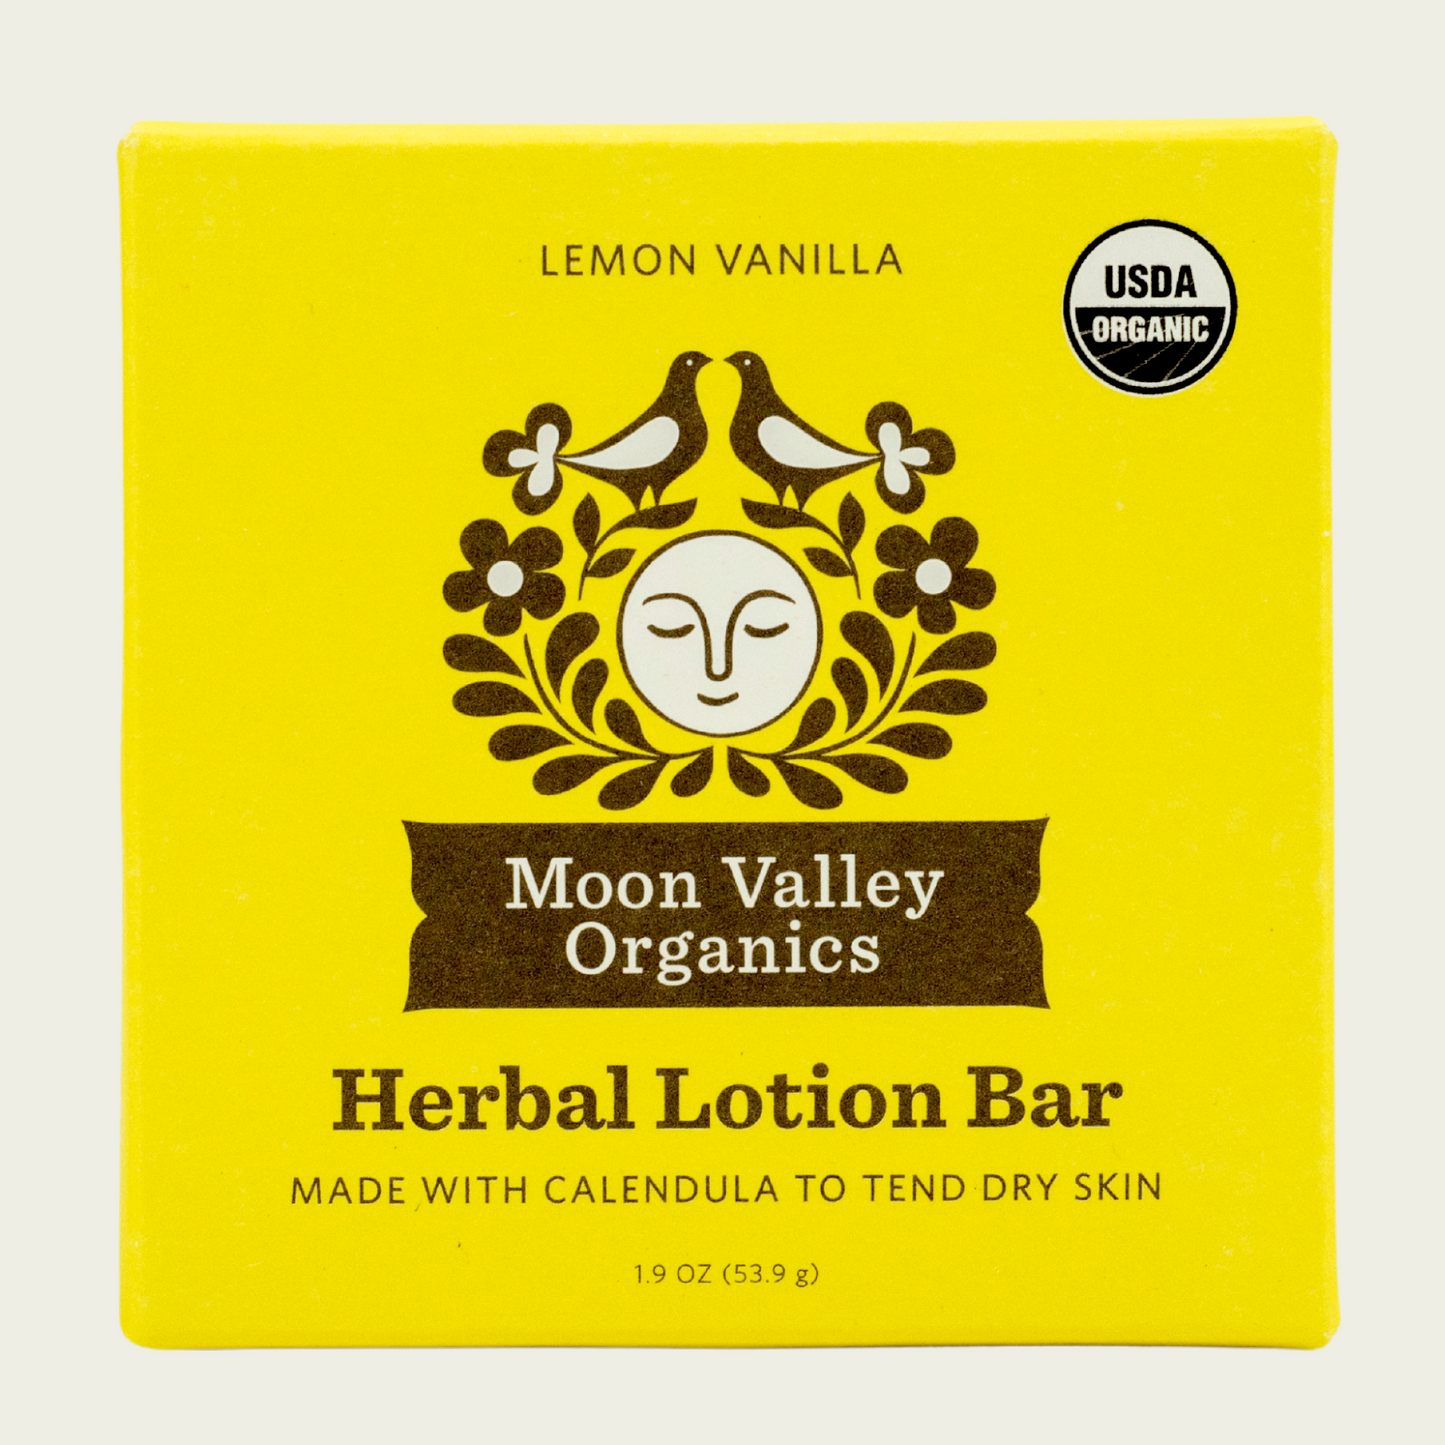 Moon Valley Organics Herbal Lotion Bar Lemon Vanilla Front Box